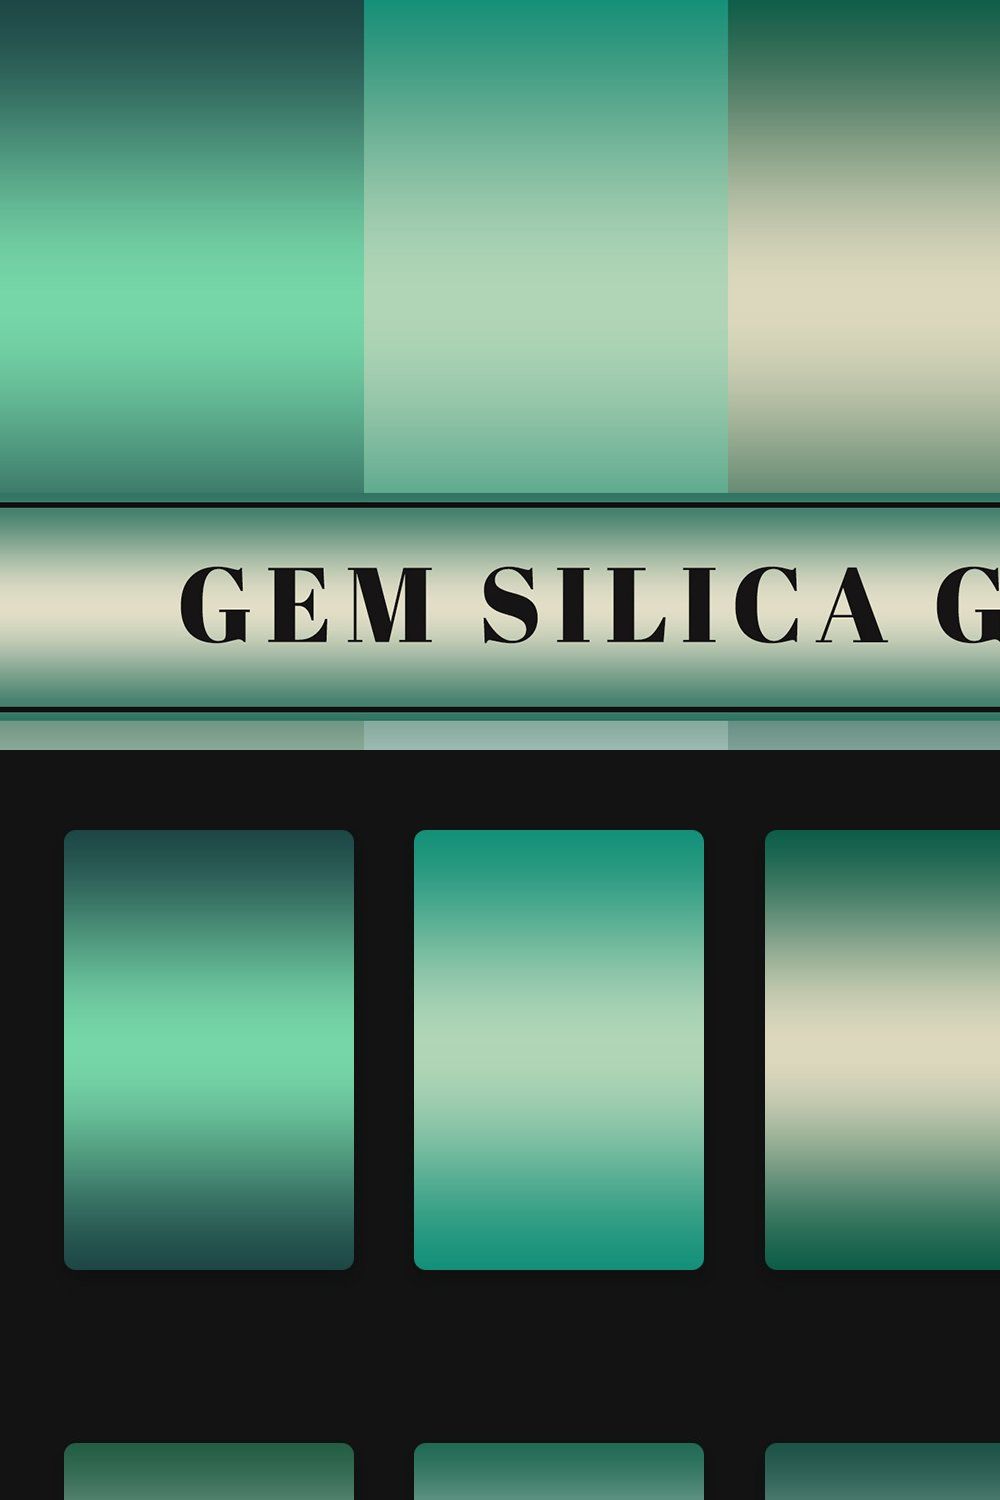 Gem Silica Gradients pinterest preview image.